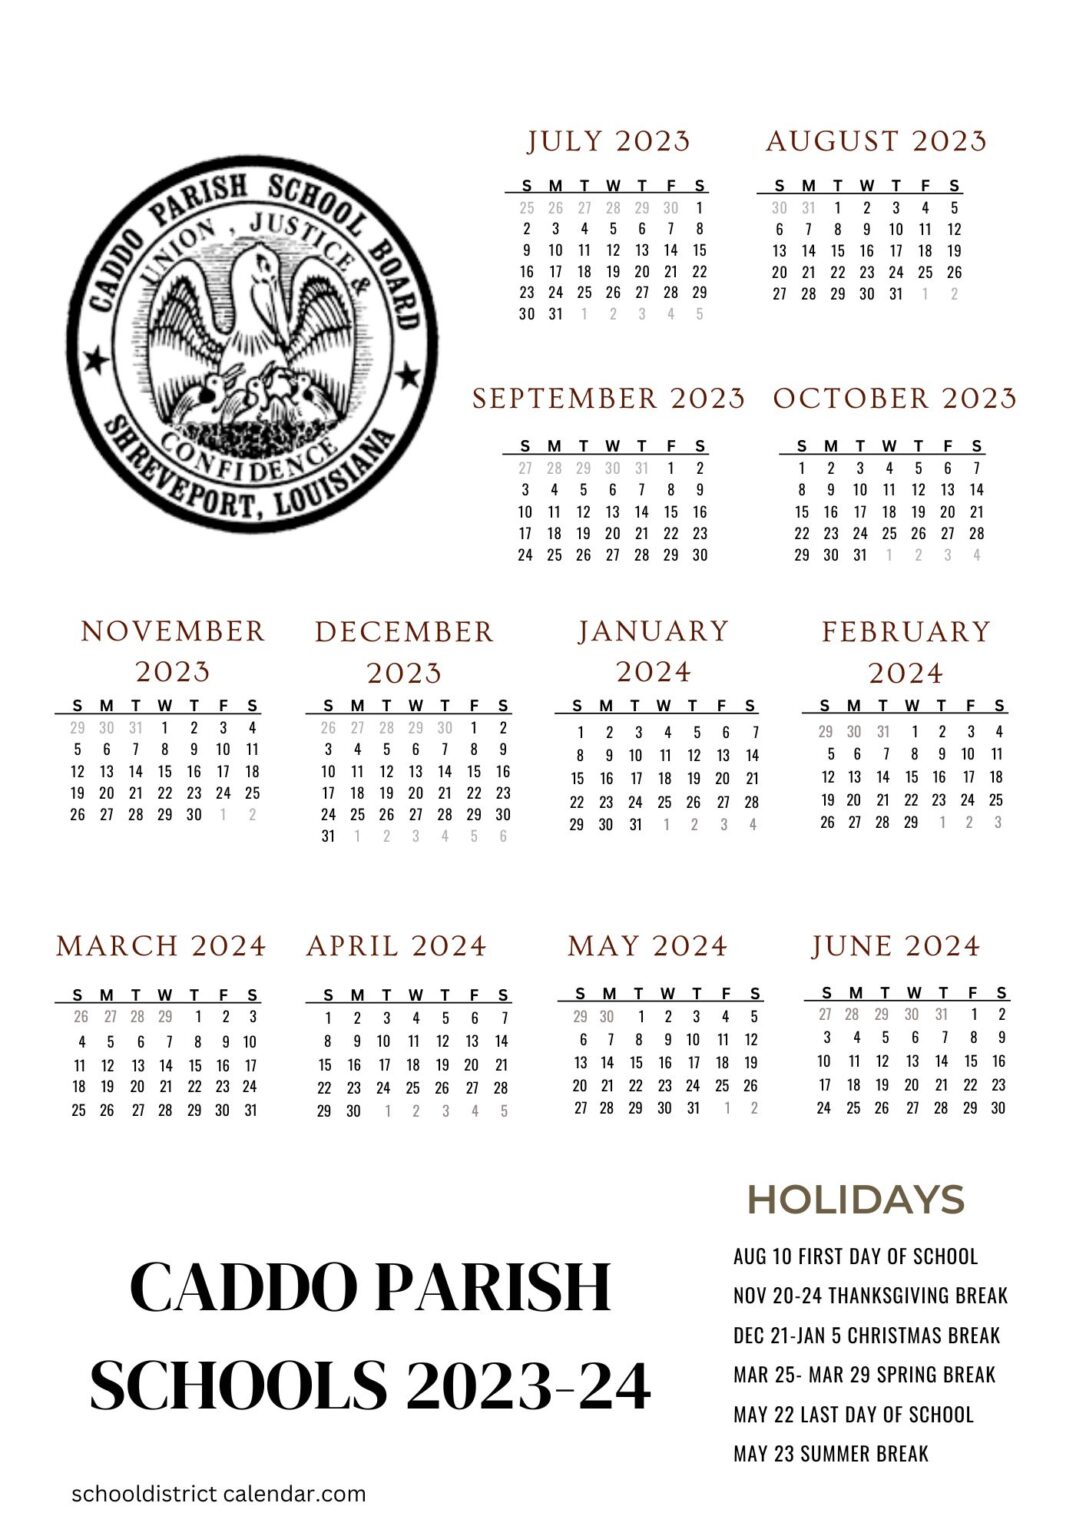 caddo-parish-schools-calendar-holidays-2023-2024